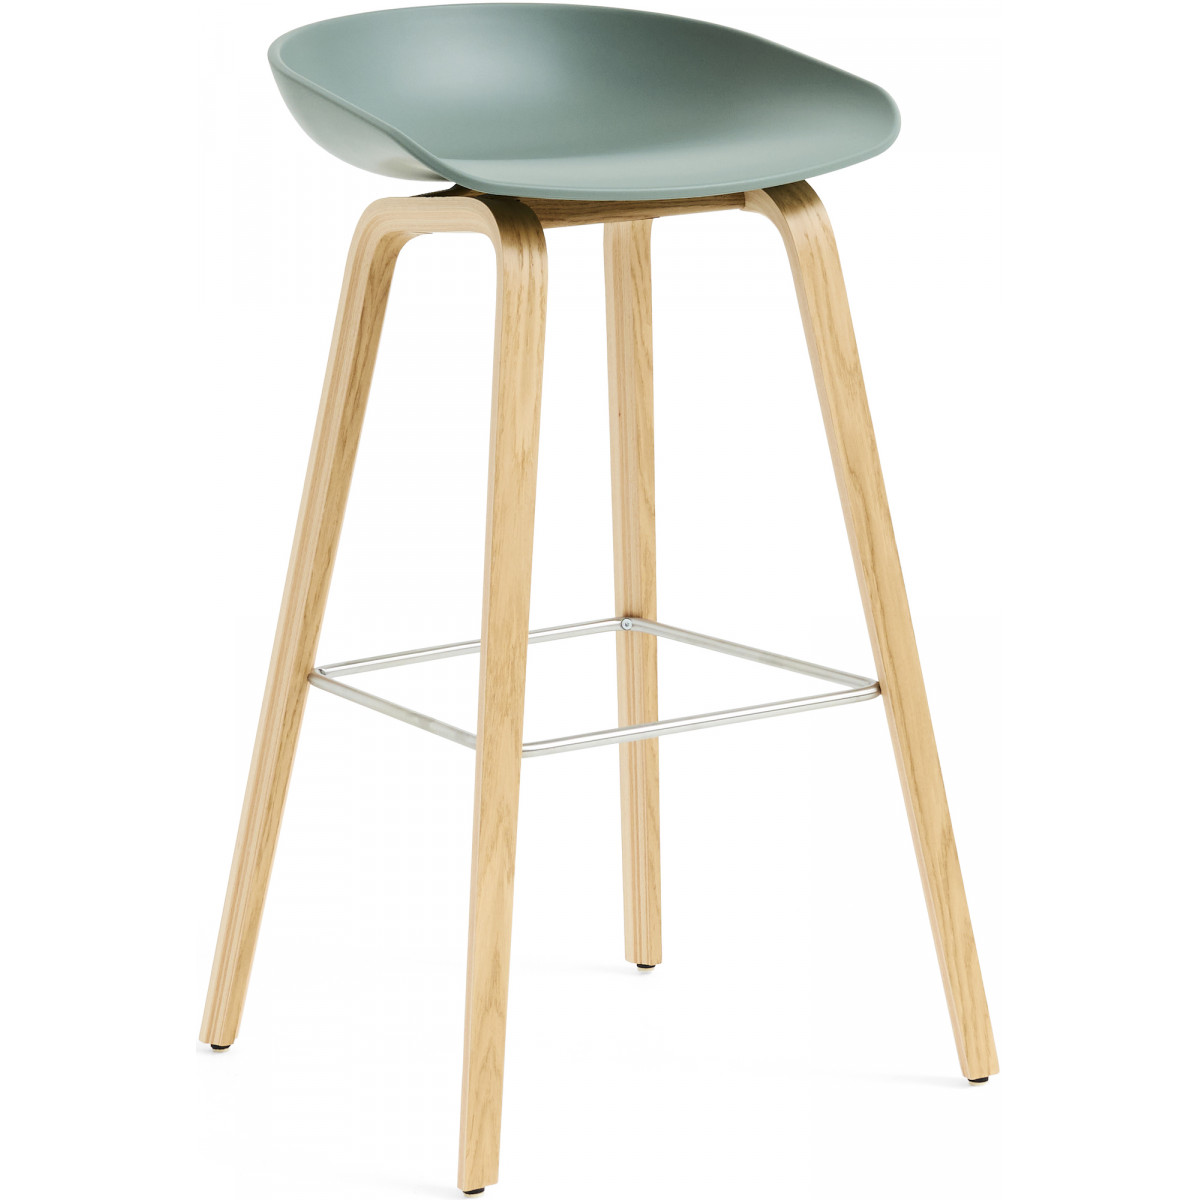 AAS32 Bar stool Fall Green + Oak base